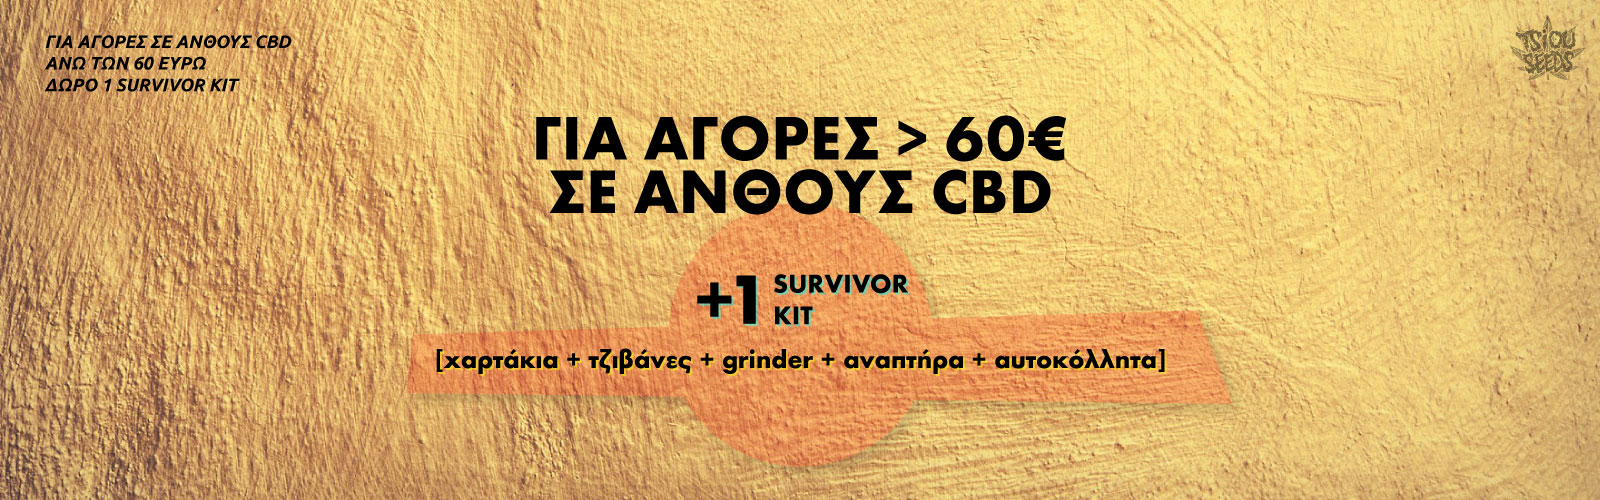 TsiouSeeds Offer - Δώρο 1 Survivor KIT για αγορές άνω των 60 ευρώ